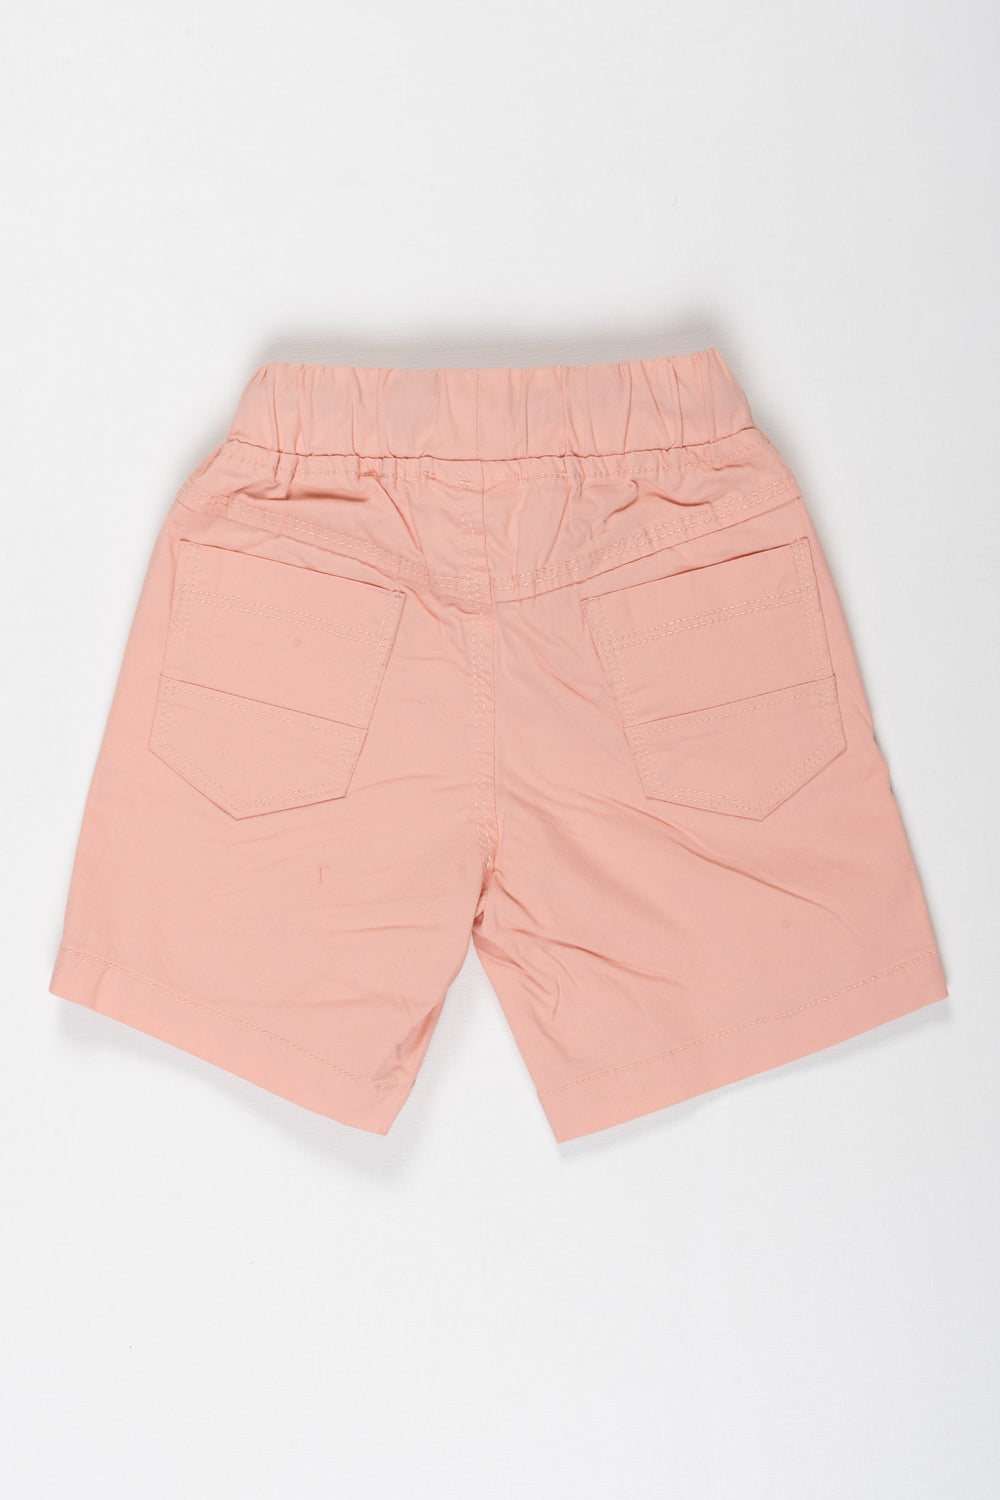 The Nesavu Boys Shorts Boys Soft Cotton Knee-Length Summer Shorts in Blush Pink Nesavu Blush Pink Cotton Shorts for Boys | Comfortable Summer Knee Length Wear | The Nesavu